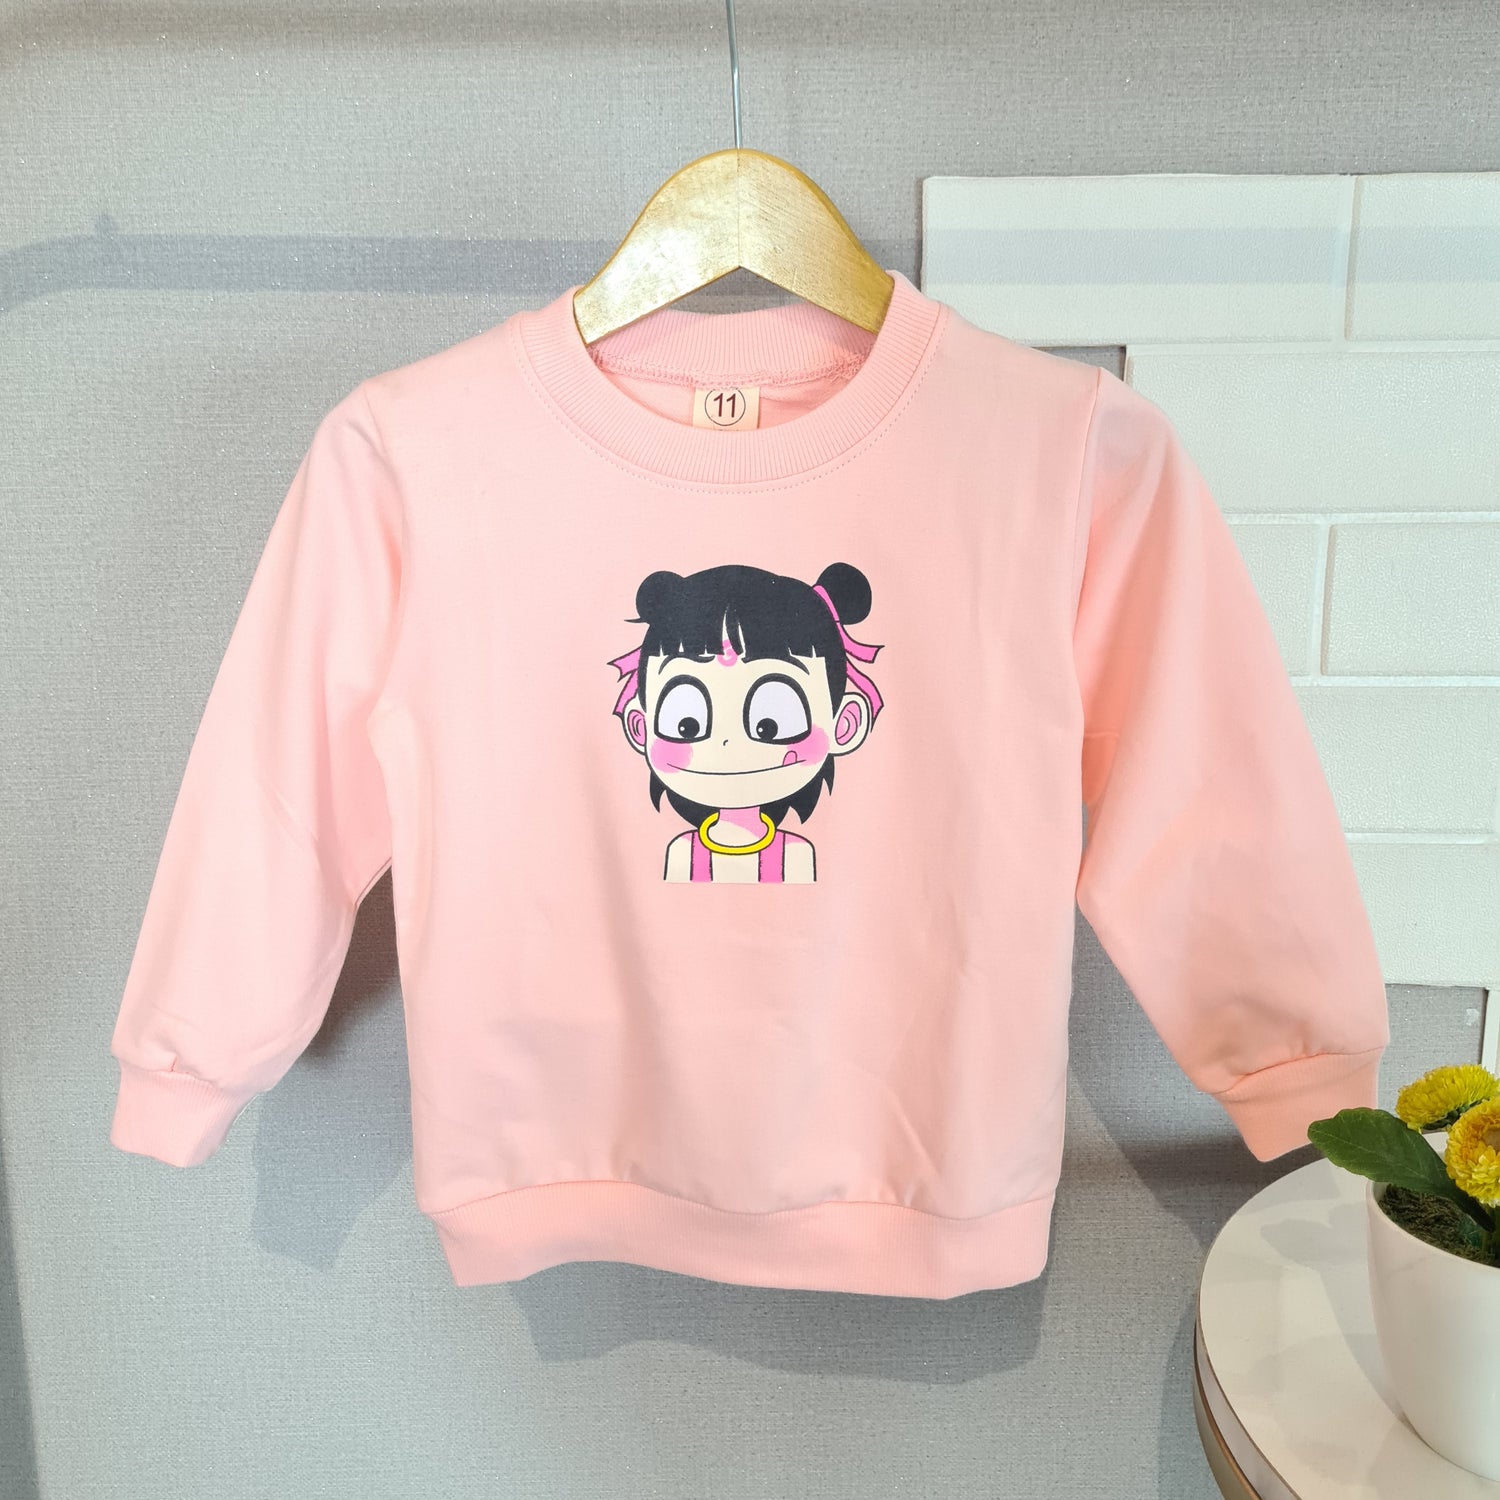 [102408] - Baju Atasan Sweater Fashion Import Anak Perempuan - Motif Cute Girl